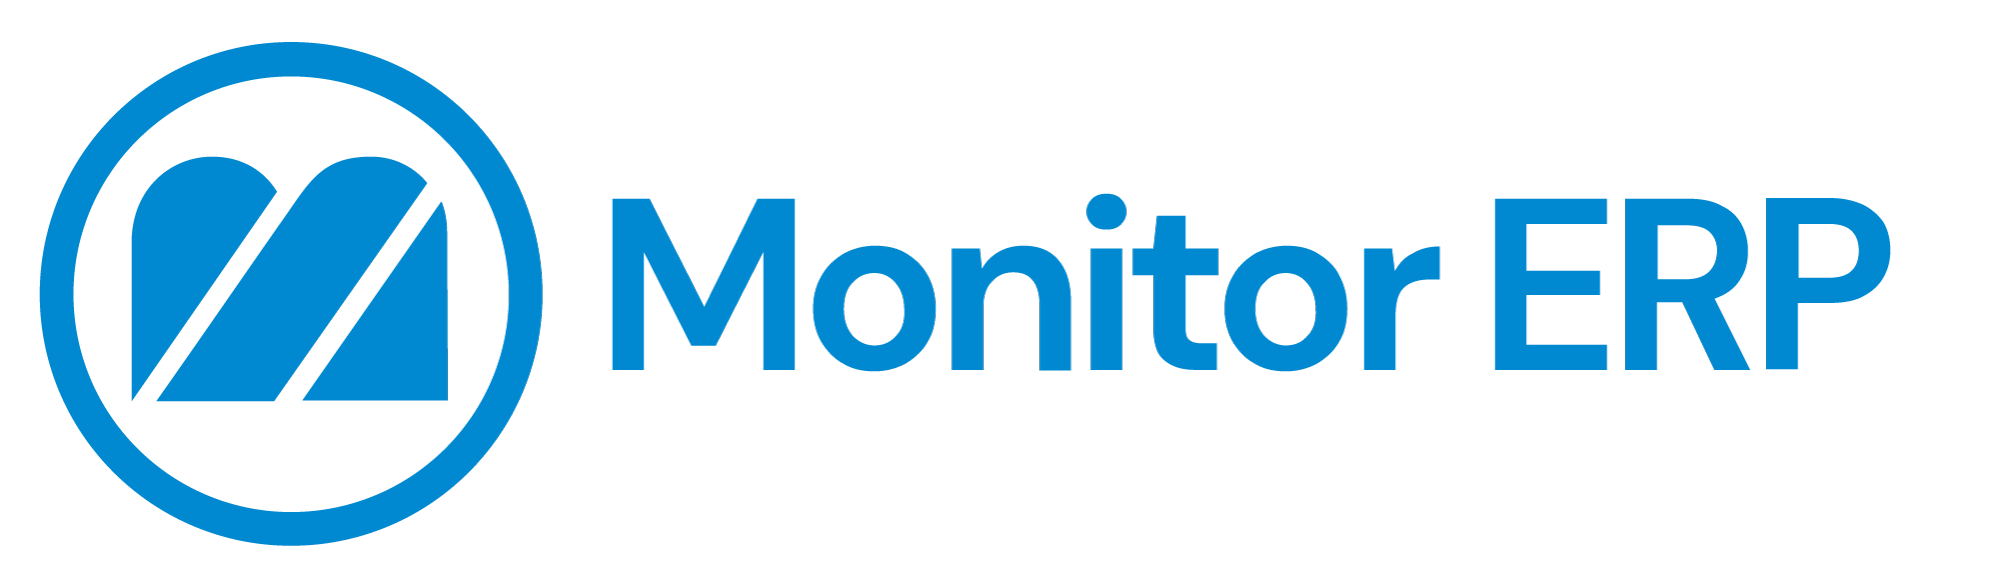 Monitor-product-logo-blue